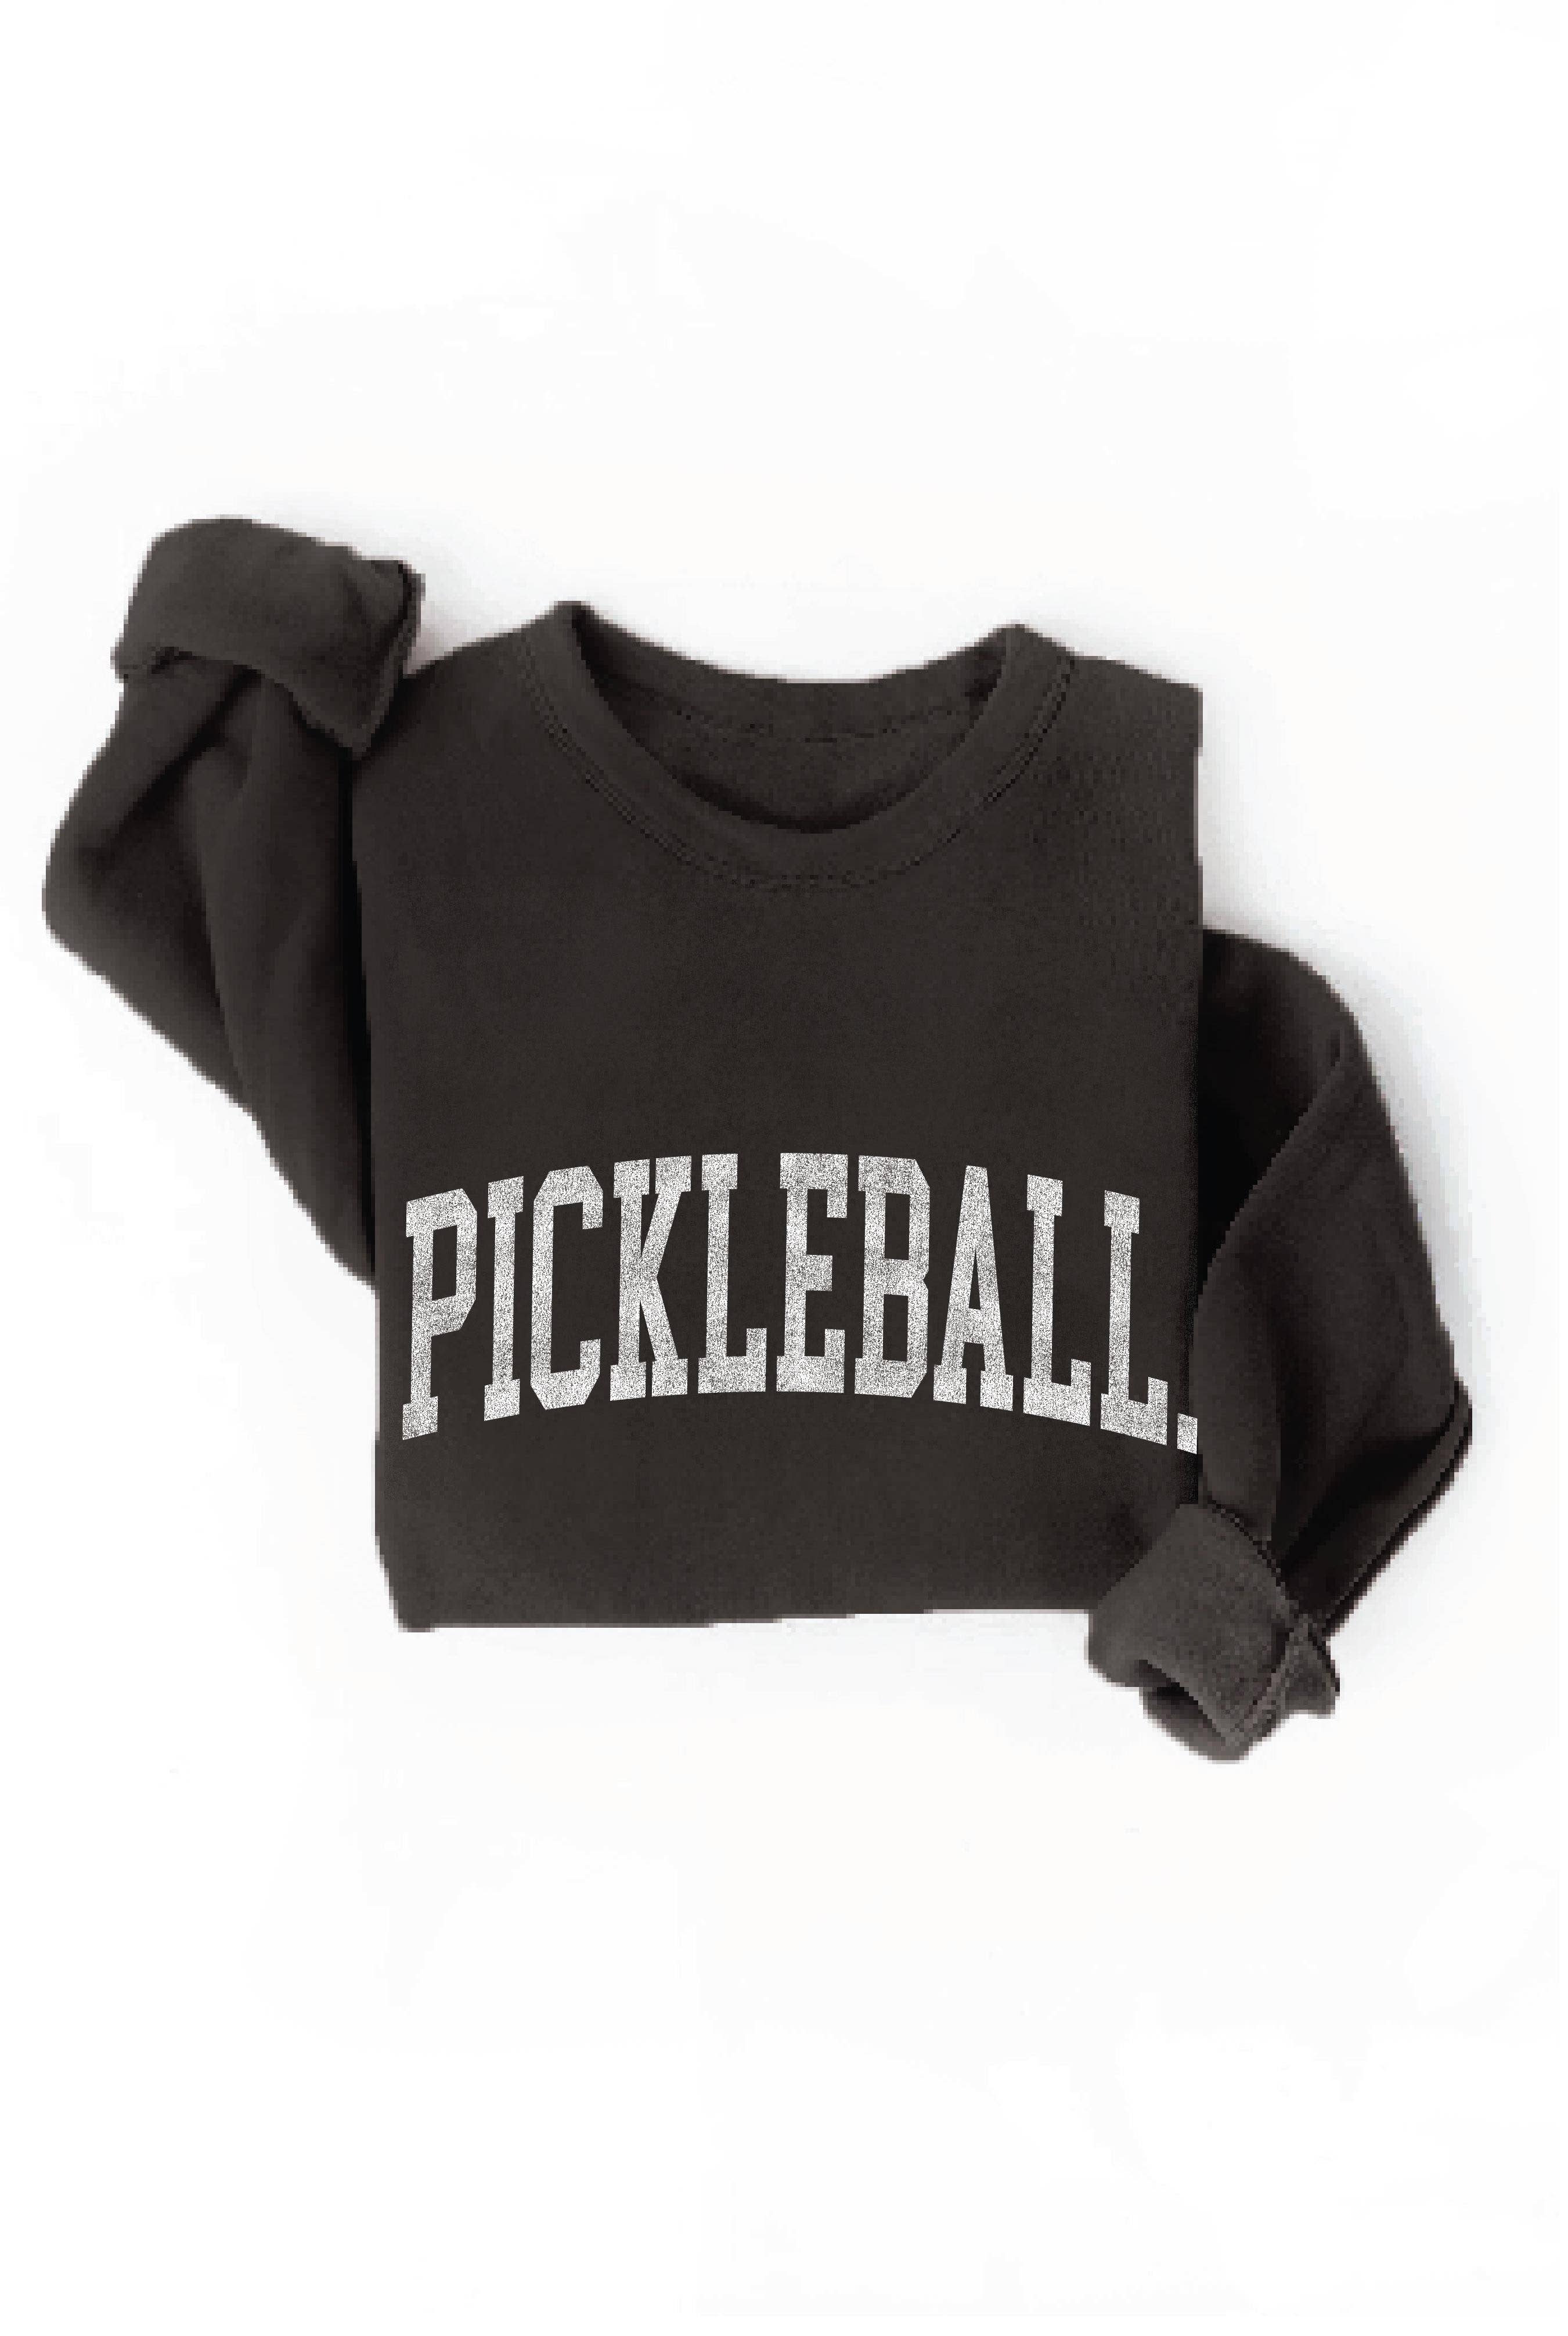 PICKLEBALL Graphic Sweatshirt: XL / ATHLETIC HEATHER